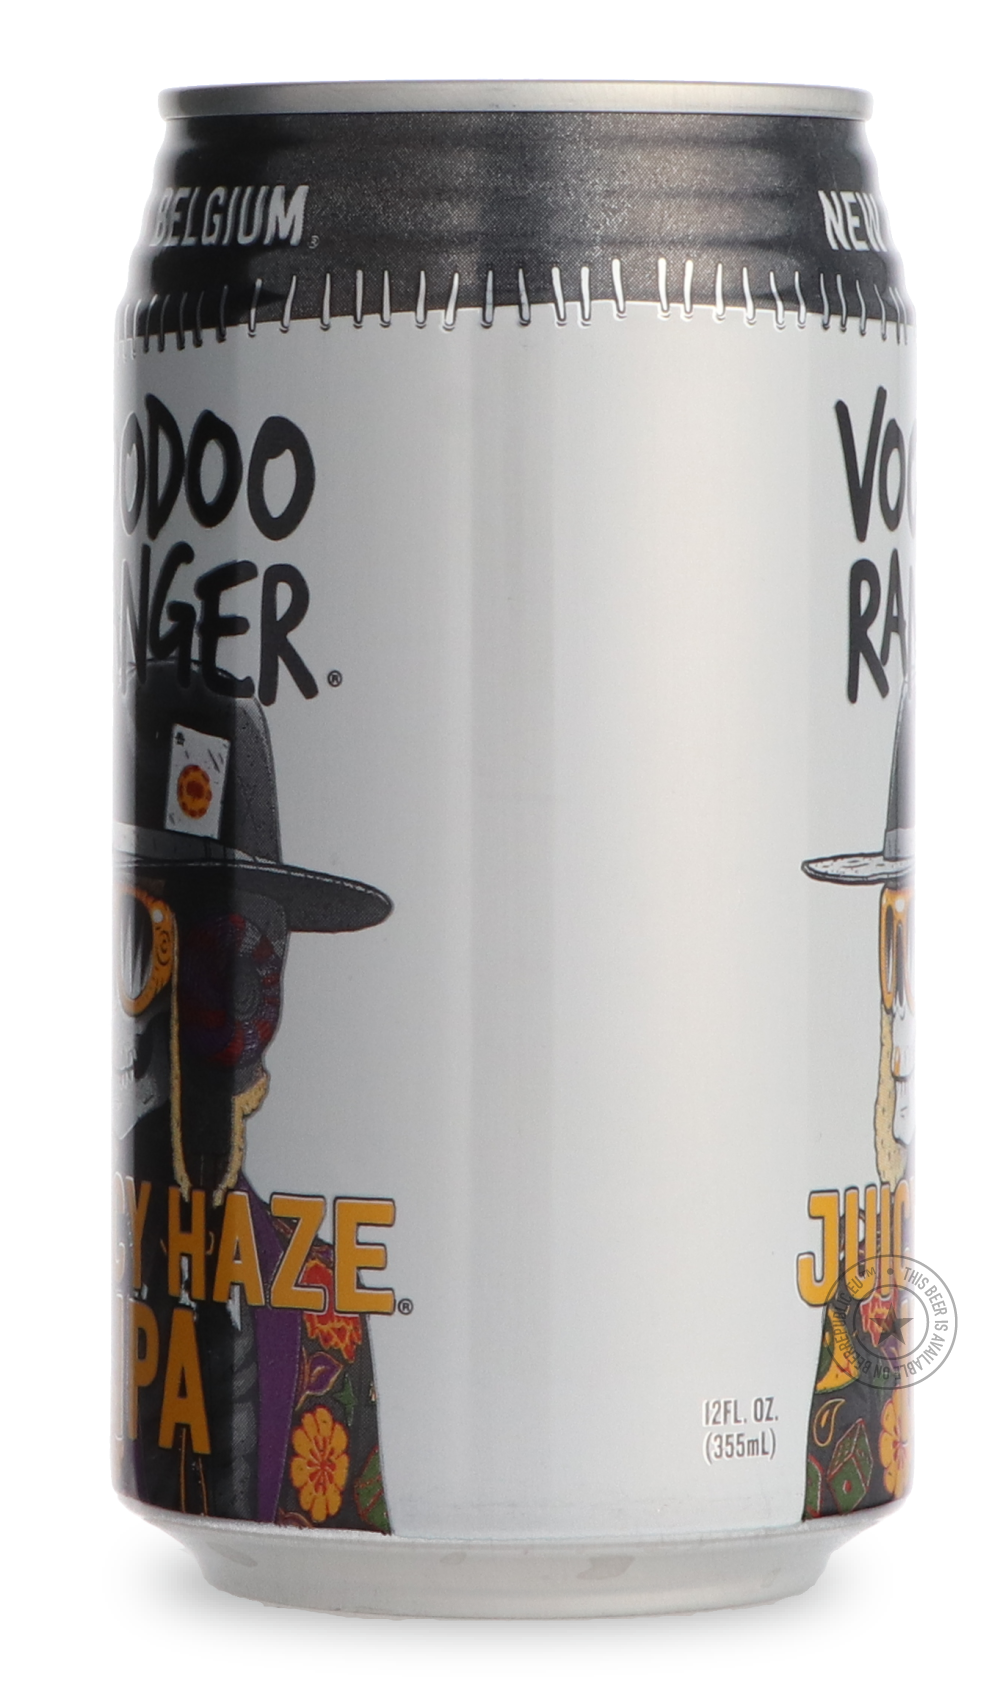 -New Belgium- Voodoo Ranger Juicy Haze IPA-IPA- Only @ Beer Republic - The best online beer store for American & Canadian craft beer - Buy beer online from the USA and Canada - Bier online kopen - Amerikaans bier kopen - Craft beer store - Craft beer kopen - Amerikanisch bier kaufen - Bier online kaufen - Acheter biere online - IPA - Stout - Porter - New England IPA - Hazy IPA - Imperial Stout - Barrel Aged - Barrel Aged Imperial Stout - Brown - Dark beer - Blond - Blonde - Pilsner - Lager - Wheat - Weizen 